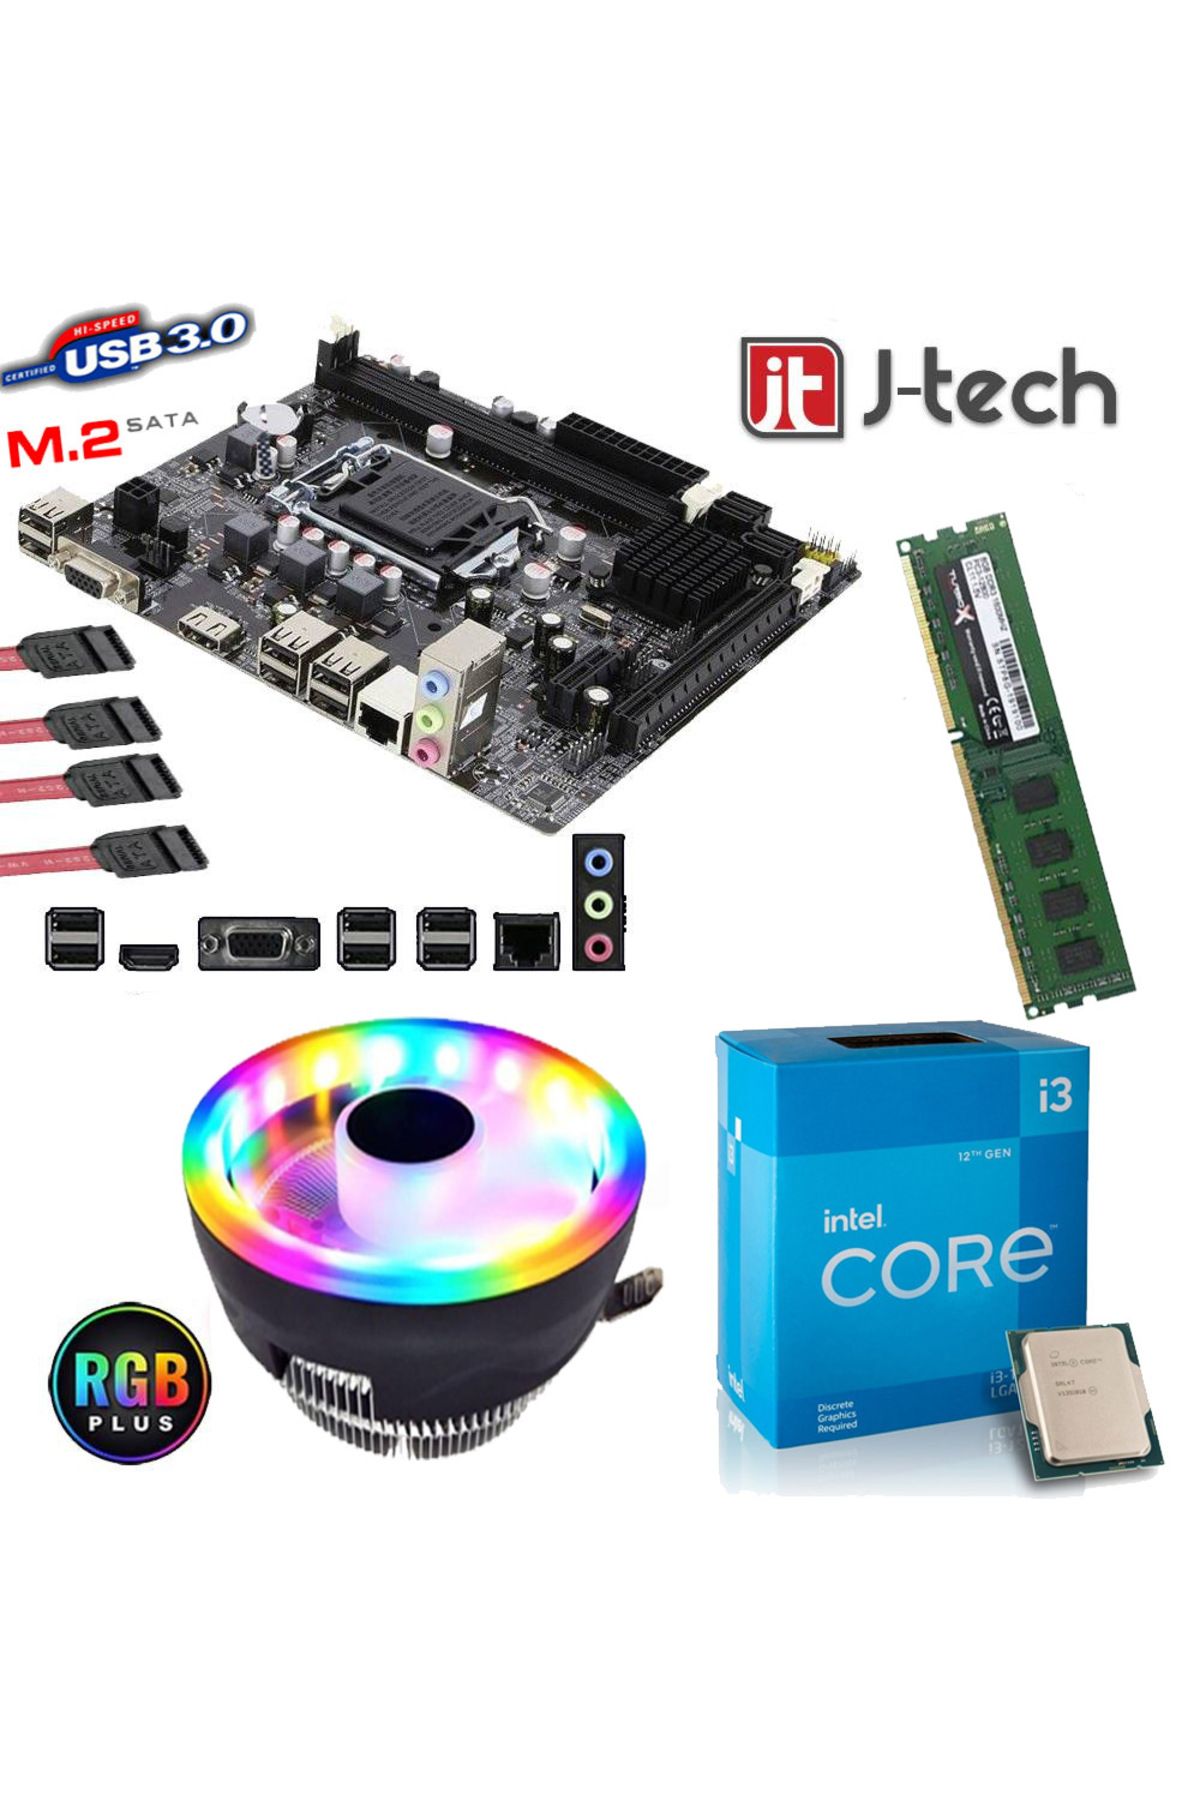 J-TECH X80 I3-2100 3.10ghz 8gb Ram H61c Anakart 1155pin Rainbow Cpu Fan Bundle Motherboard